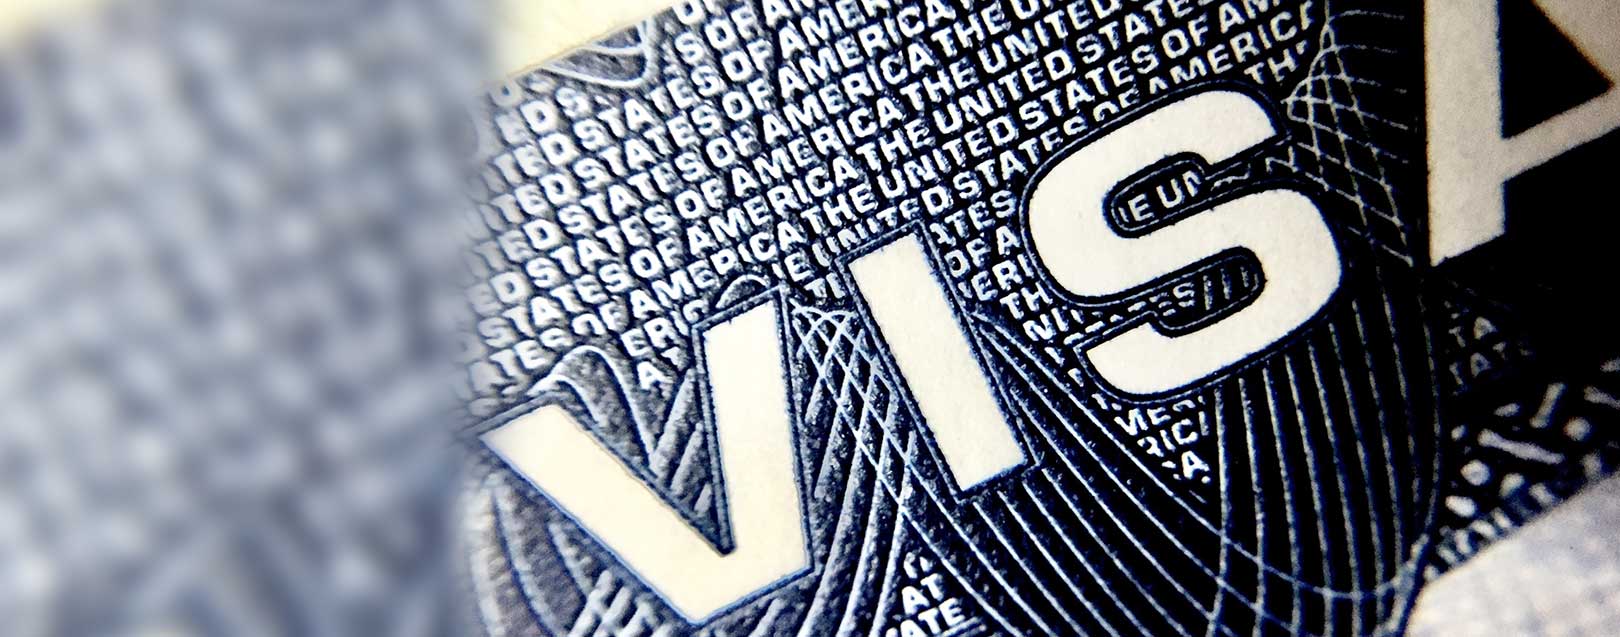 Trump Govt seeks 60 days to respond to H-4 visa case